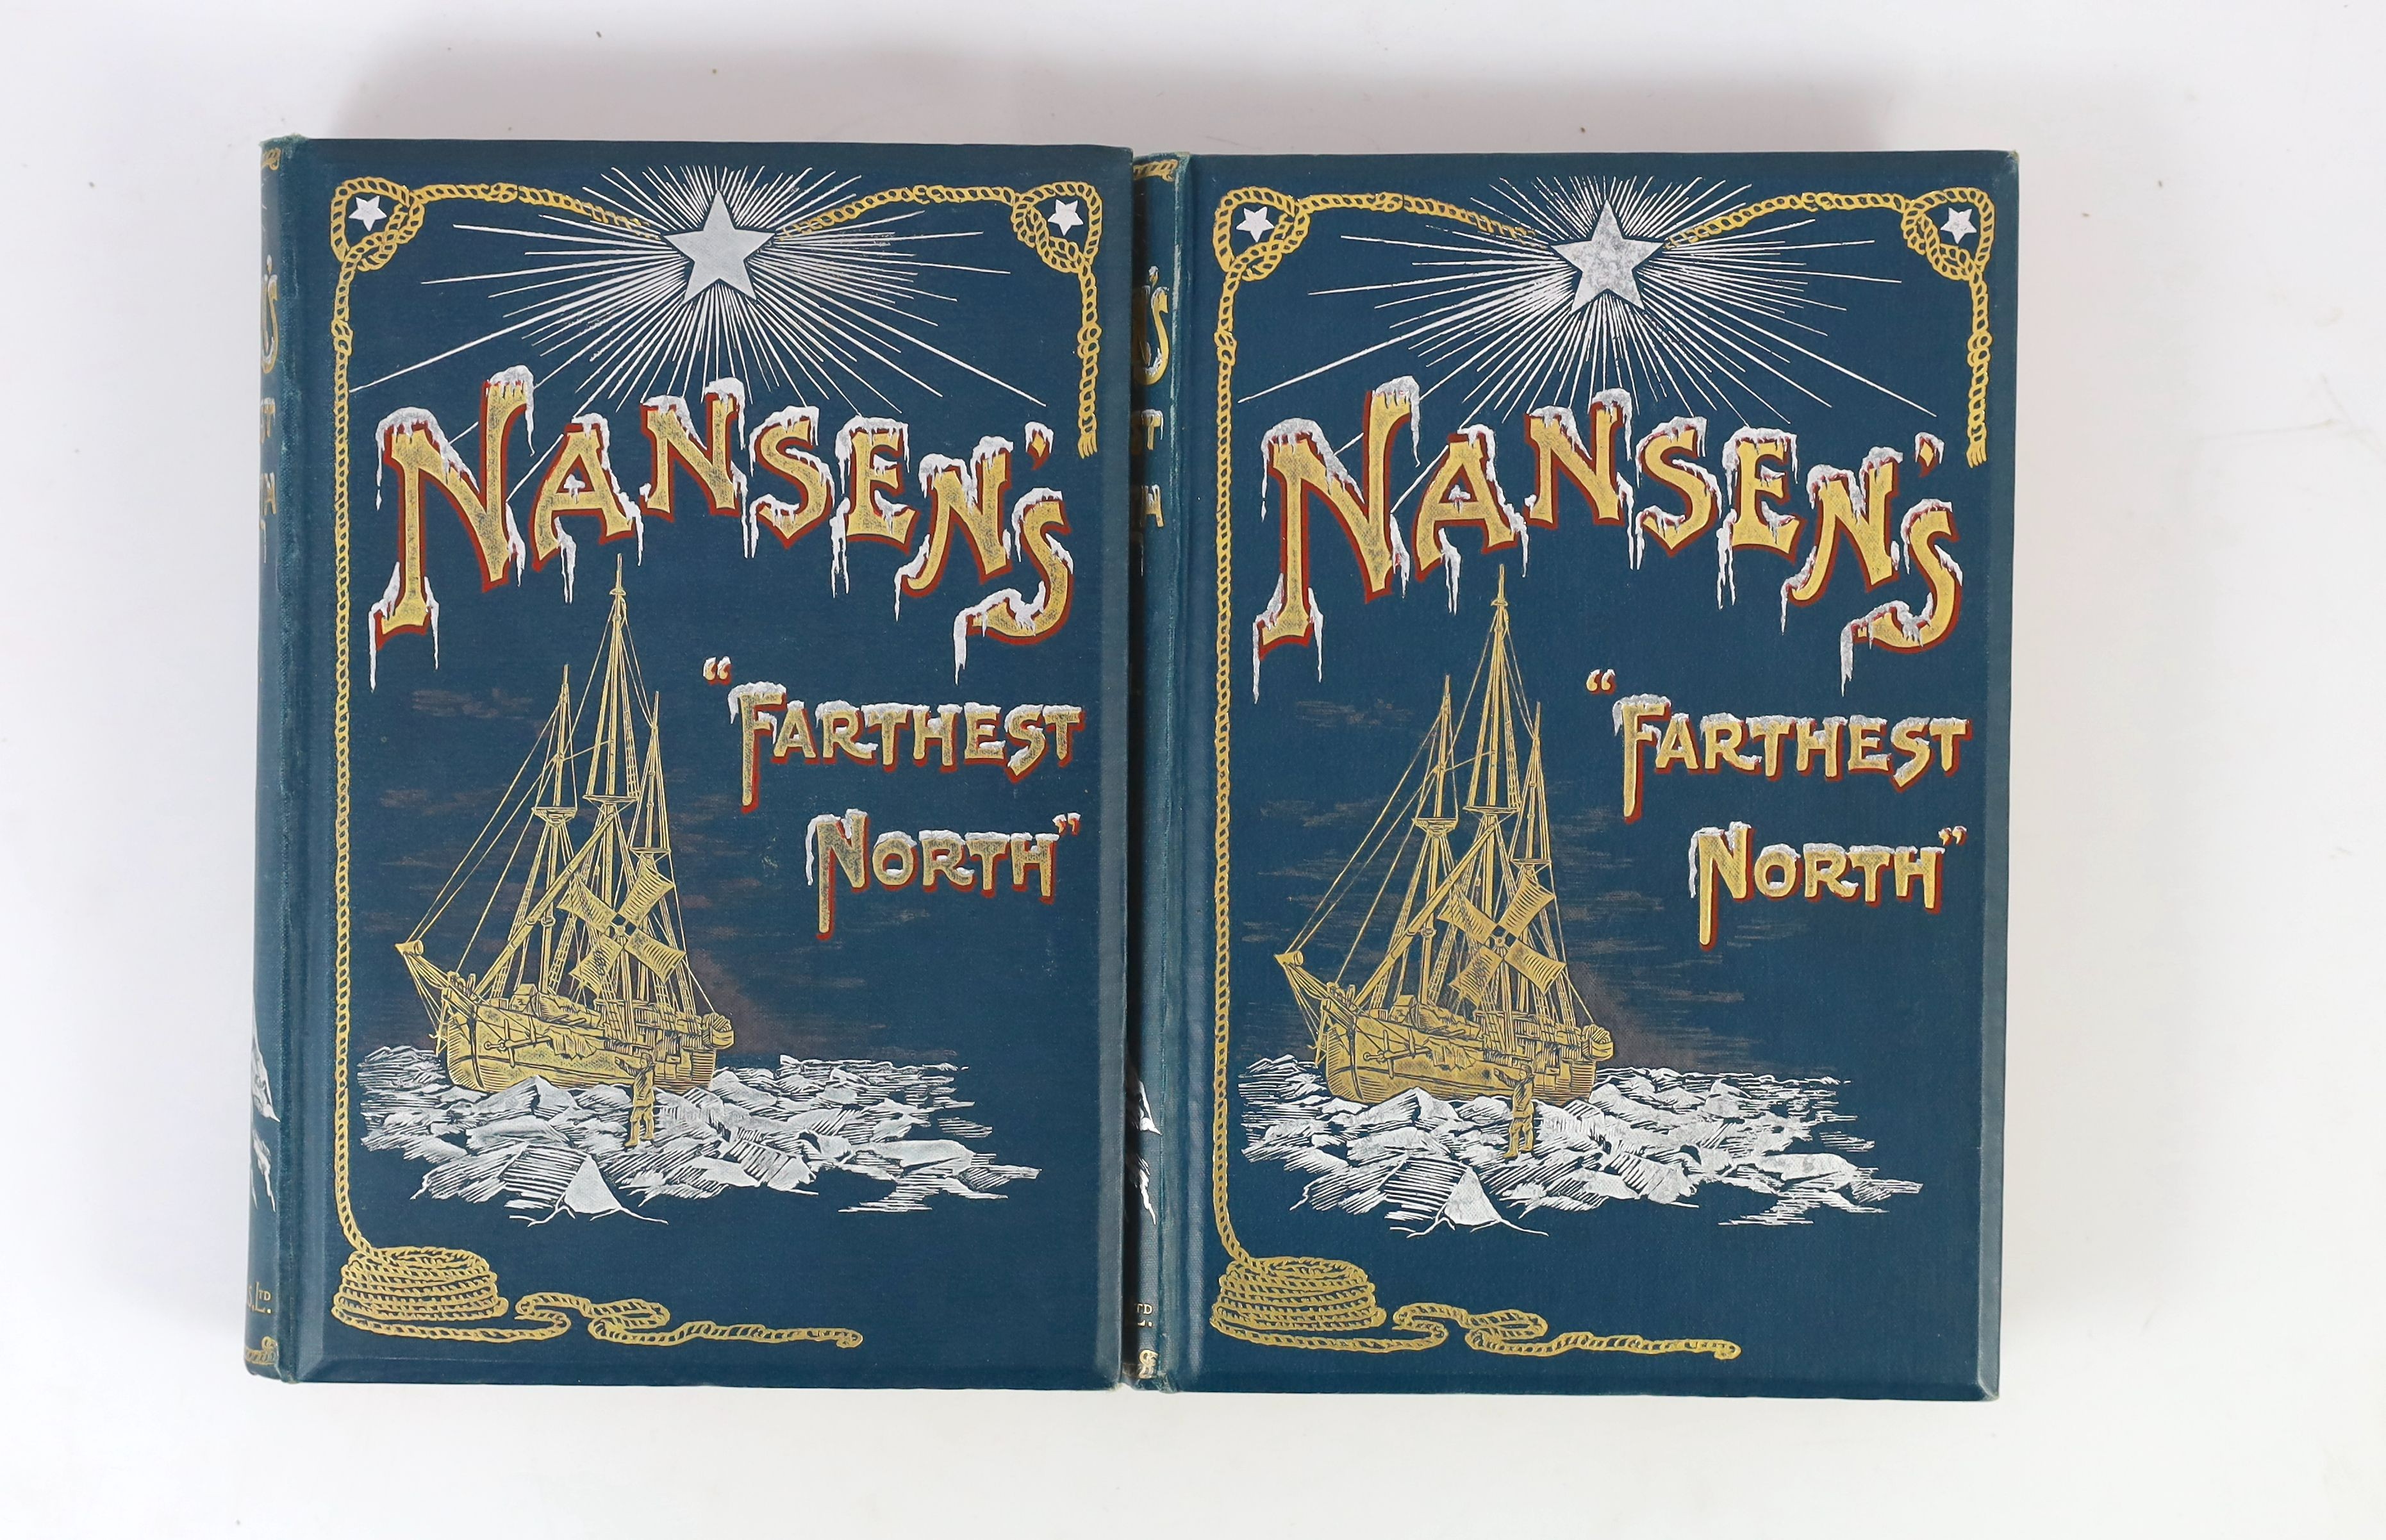 Nansen, Fridtjof - Farthest North, 2 vols, 8vo, original pictorial cloth, with folding map, George Newnes, London, 1898